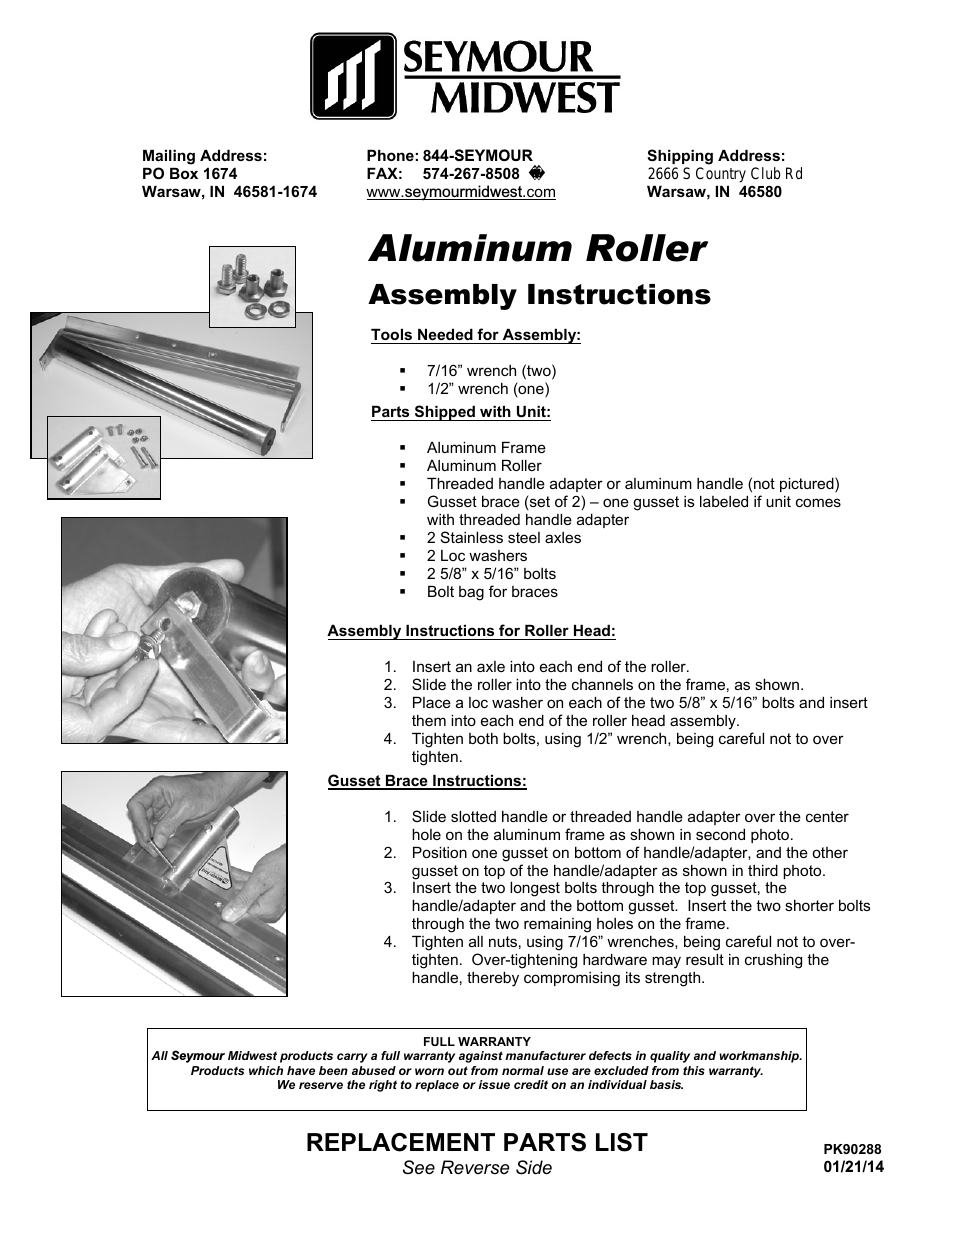 Aluminum Roller(PK90288)